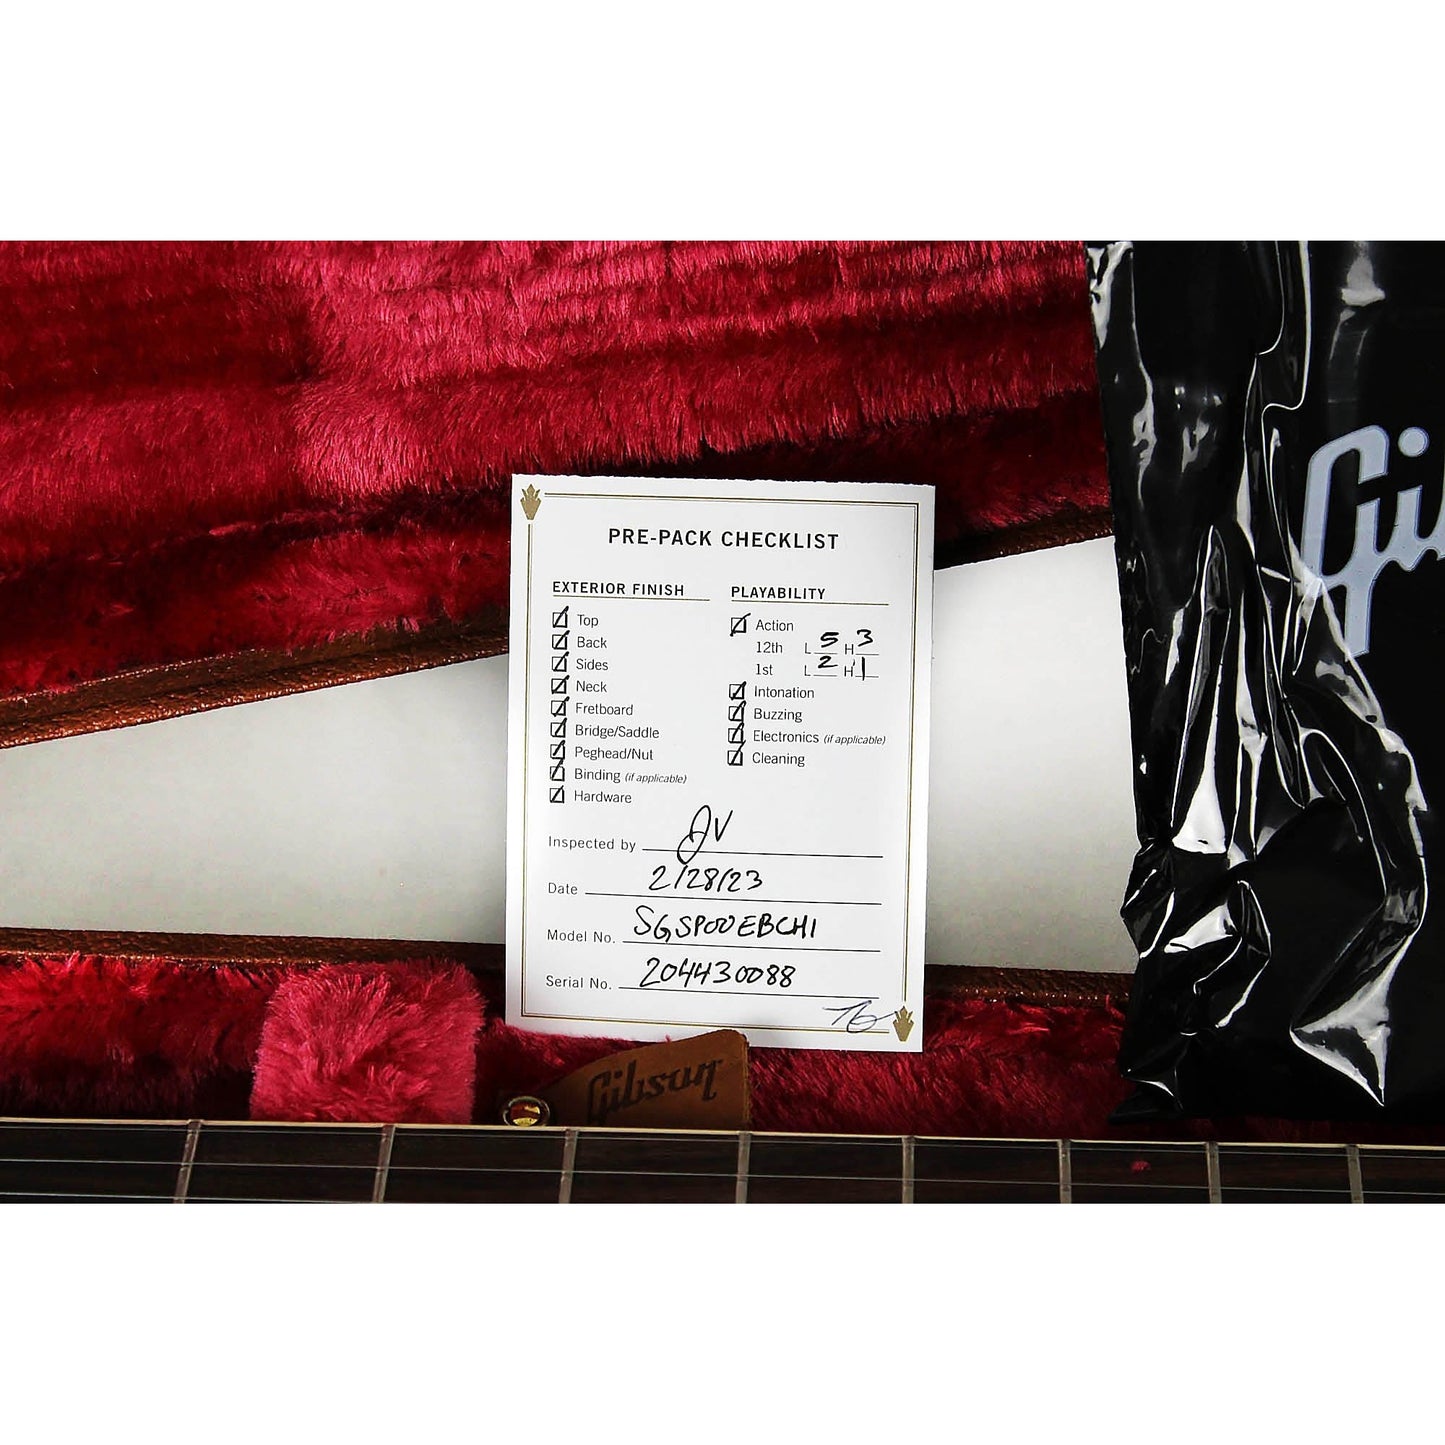 Gibson SG Special - Ebony - Leitz Music-711106069289-SGSP00EBCH1